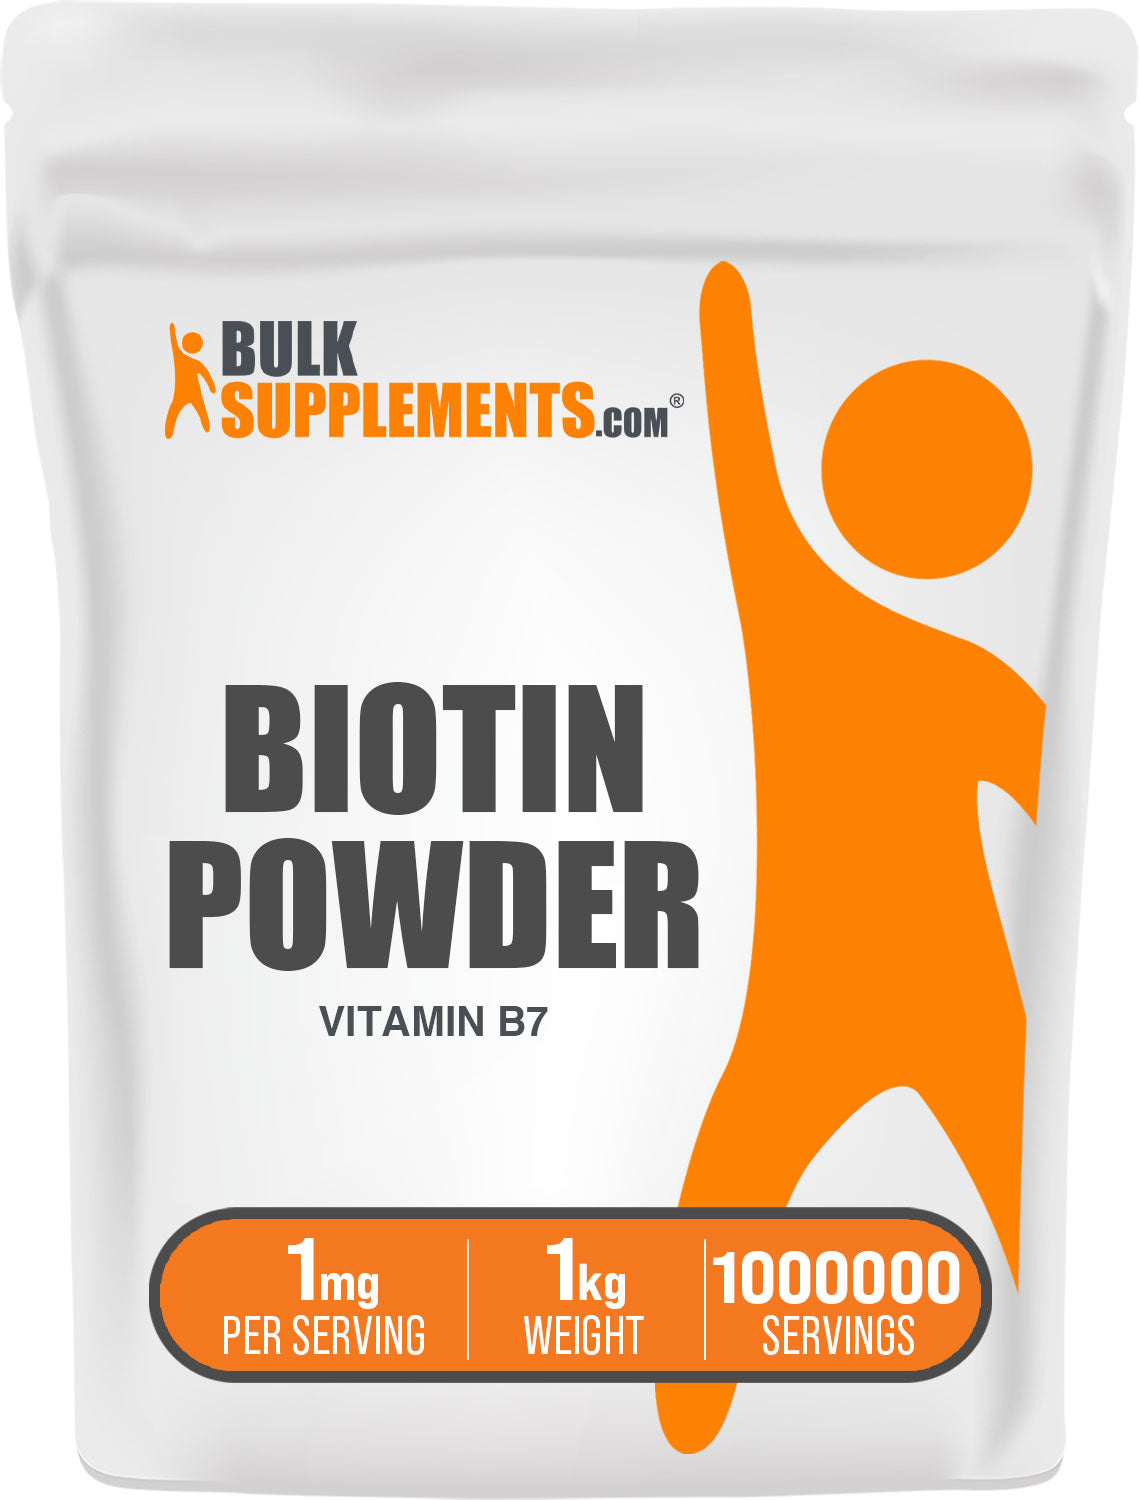 BulkSupplements Biotin Powder Vitamin B7 1kg bag